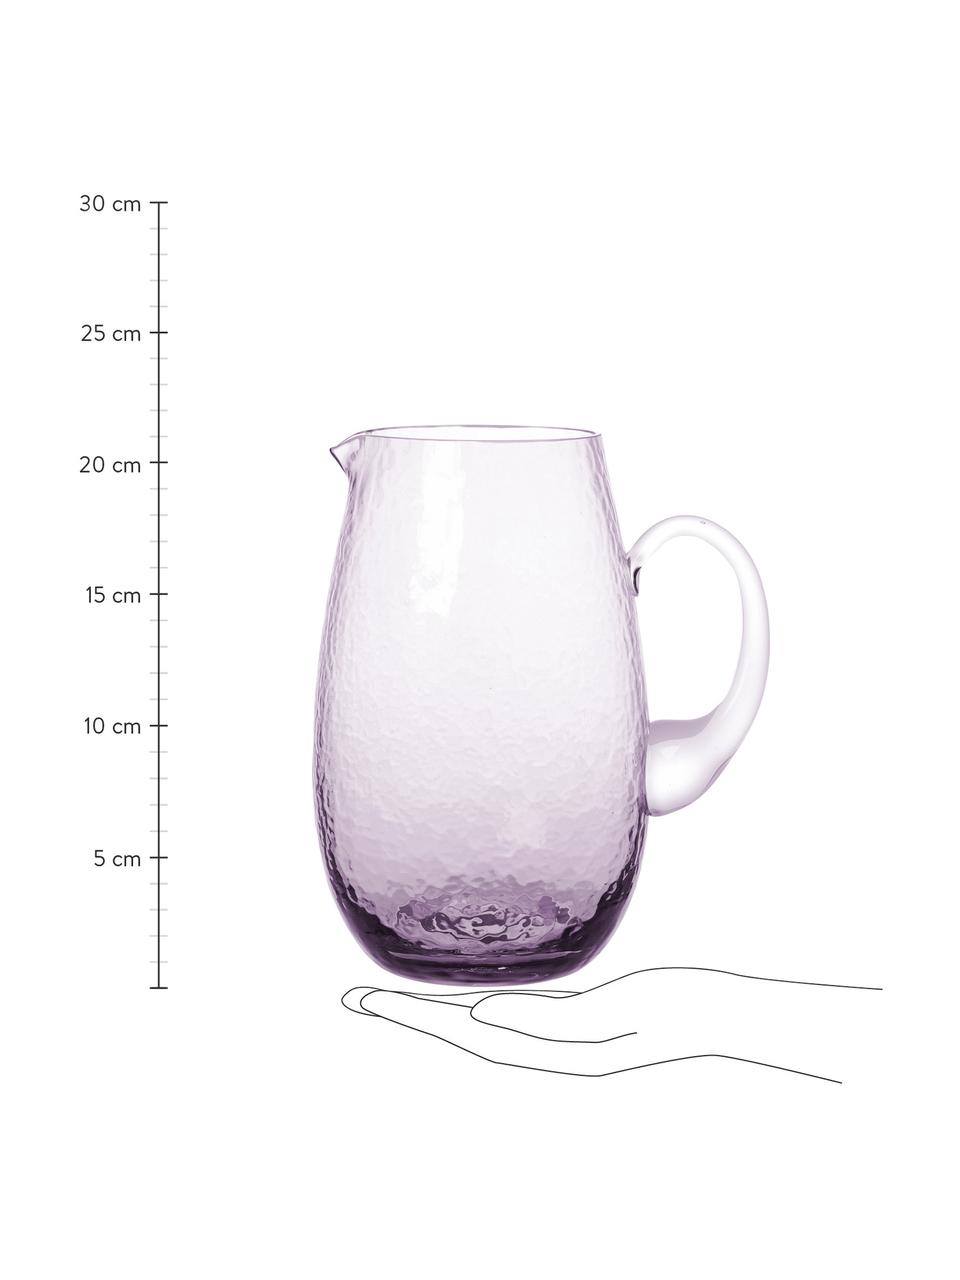 Großer mundgeblasener Krug Hammered mit gehämmerter Oberfläche, 2 L, Glas, mundgeblasen, Lila, transparent, Ø 14 x H 22 cm, 2 L